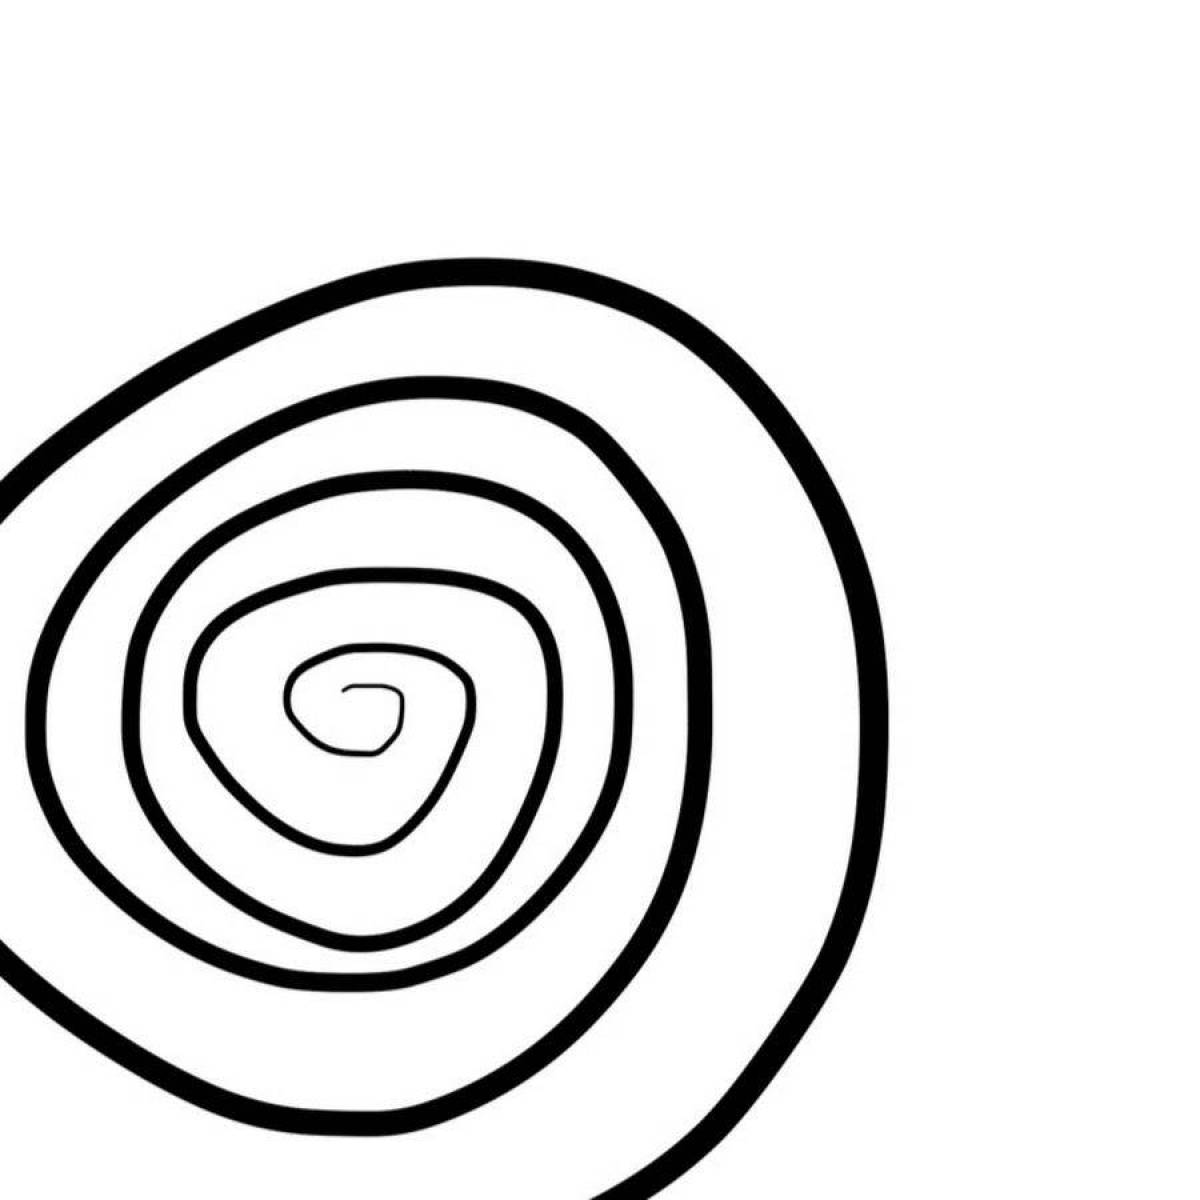 Coloring hypnotic spiral improvisation